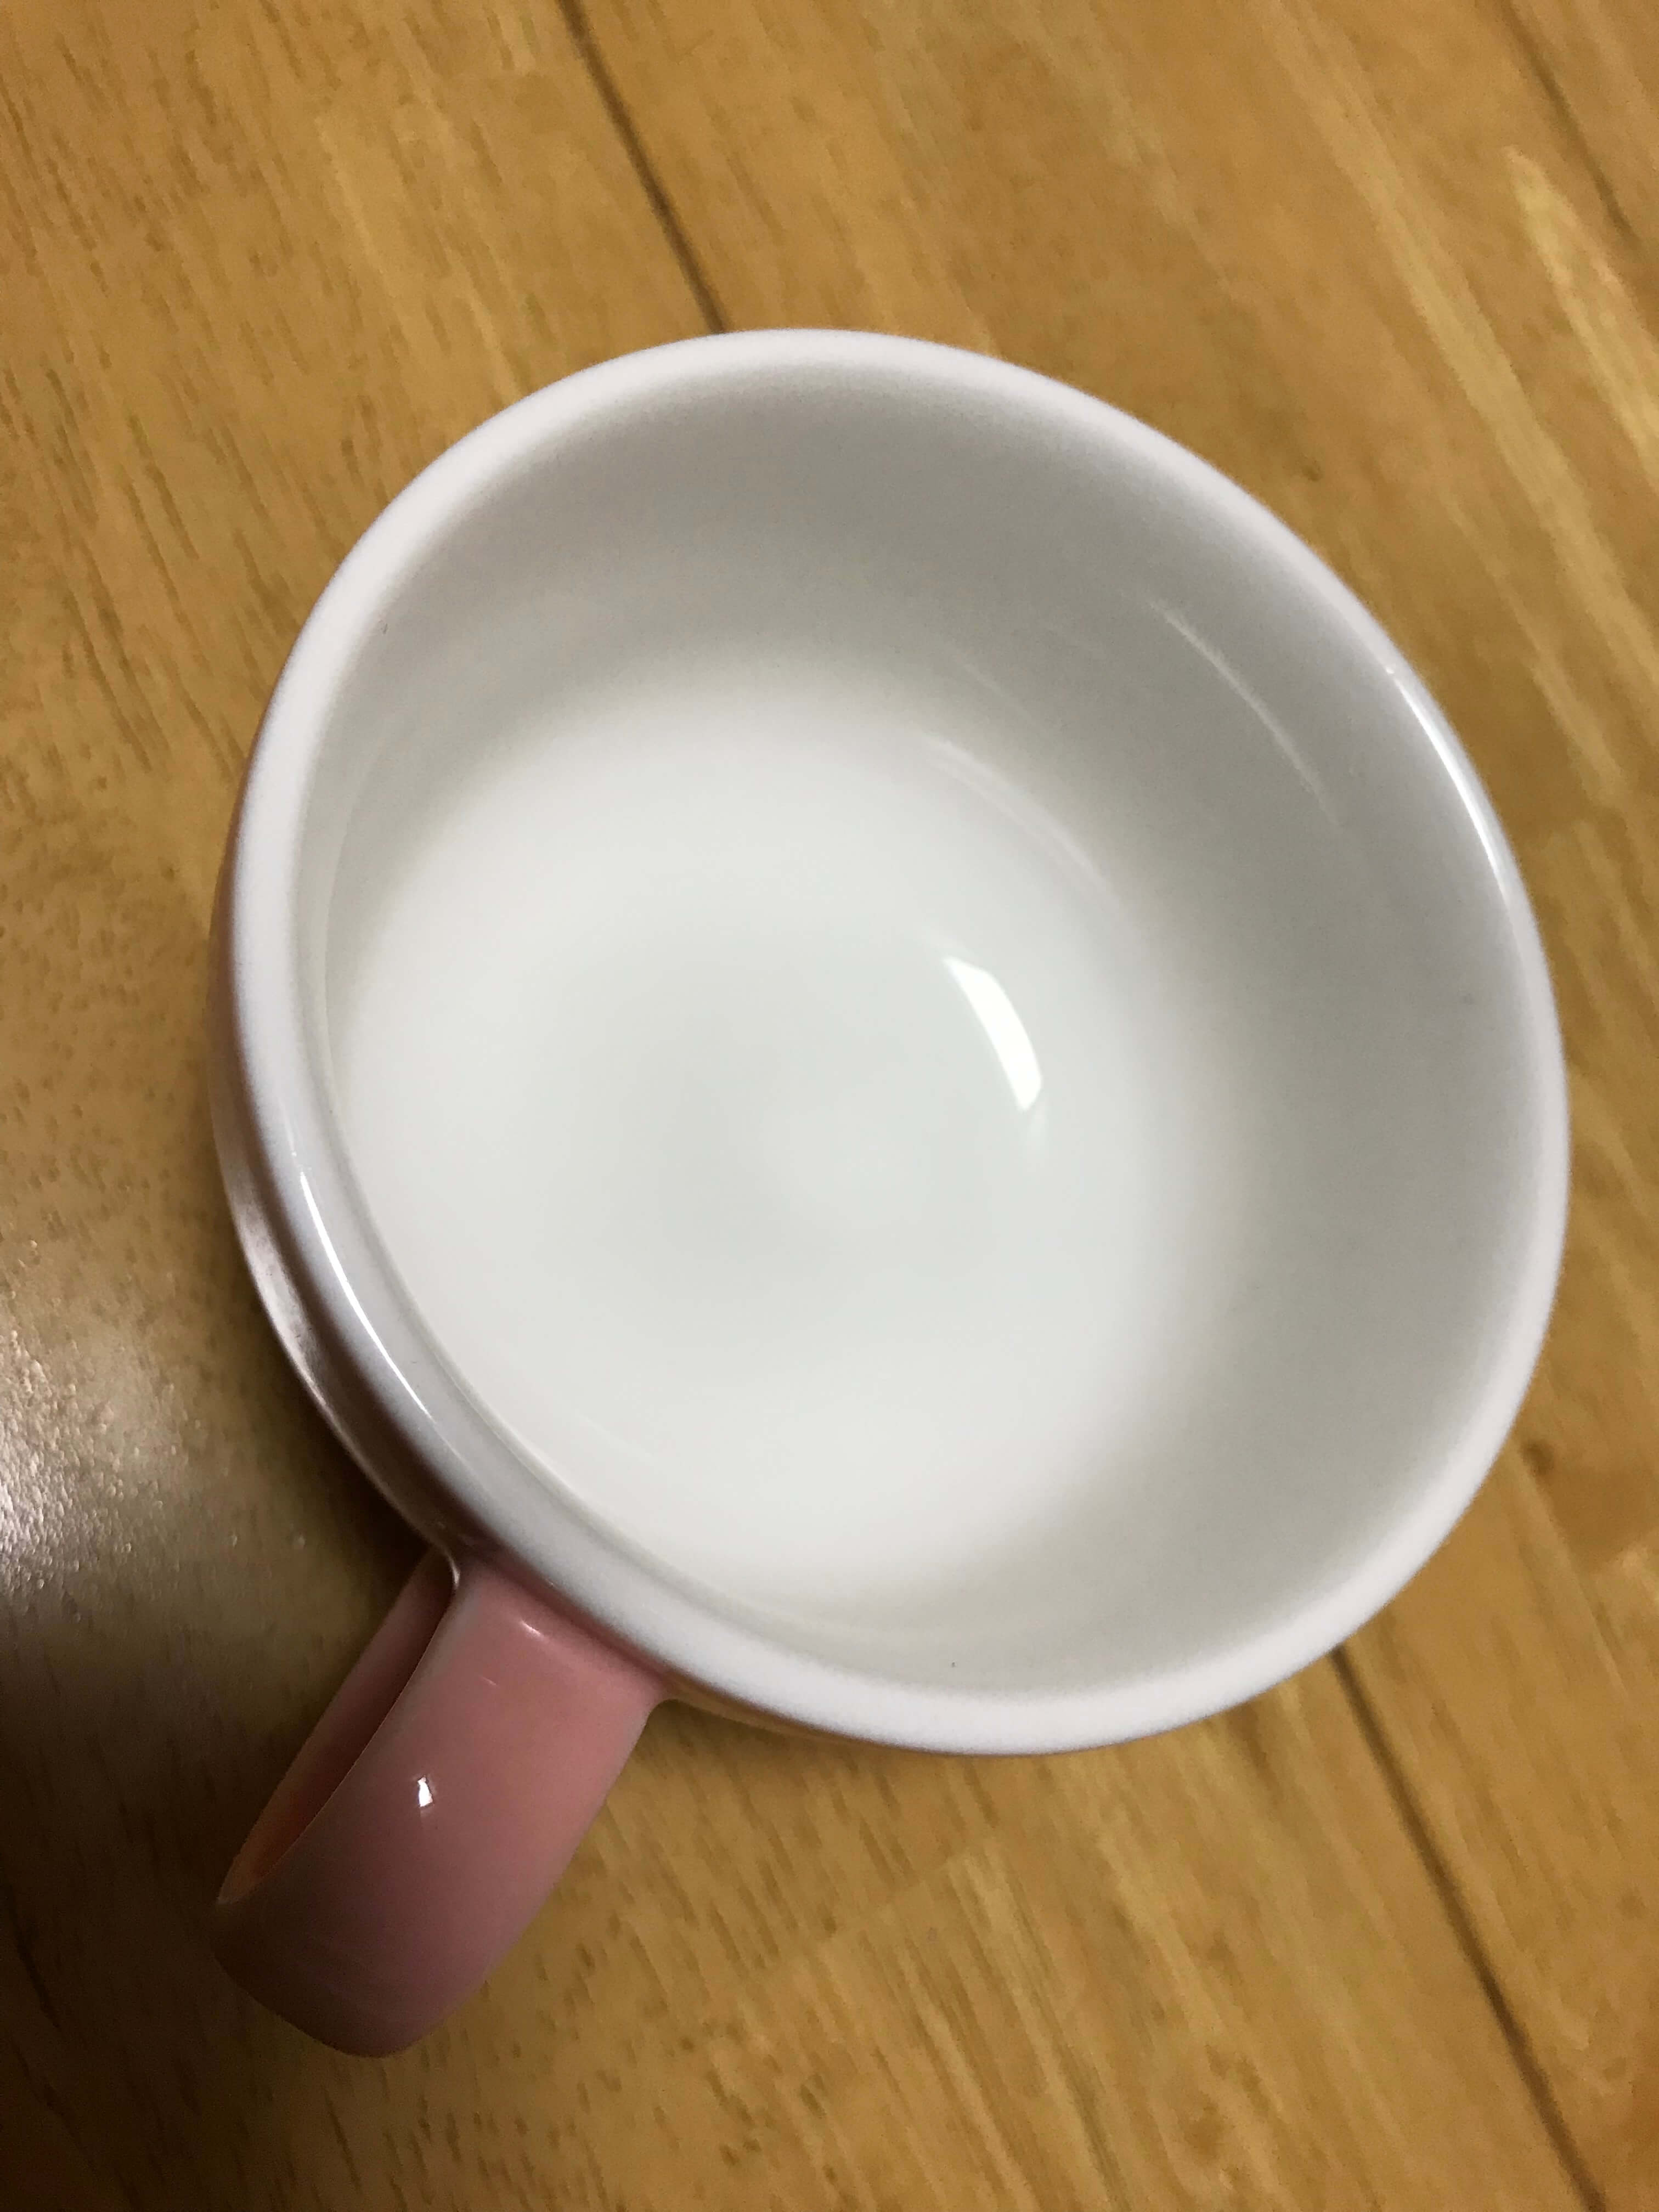 ORIGAMIカップの内側の曲線